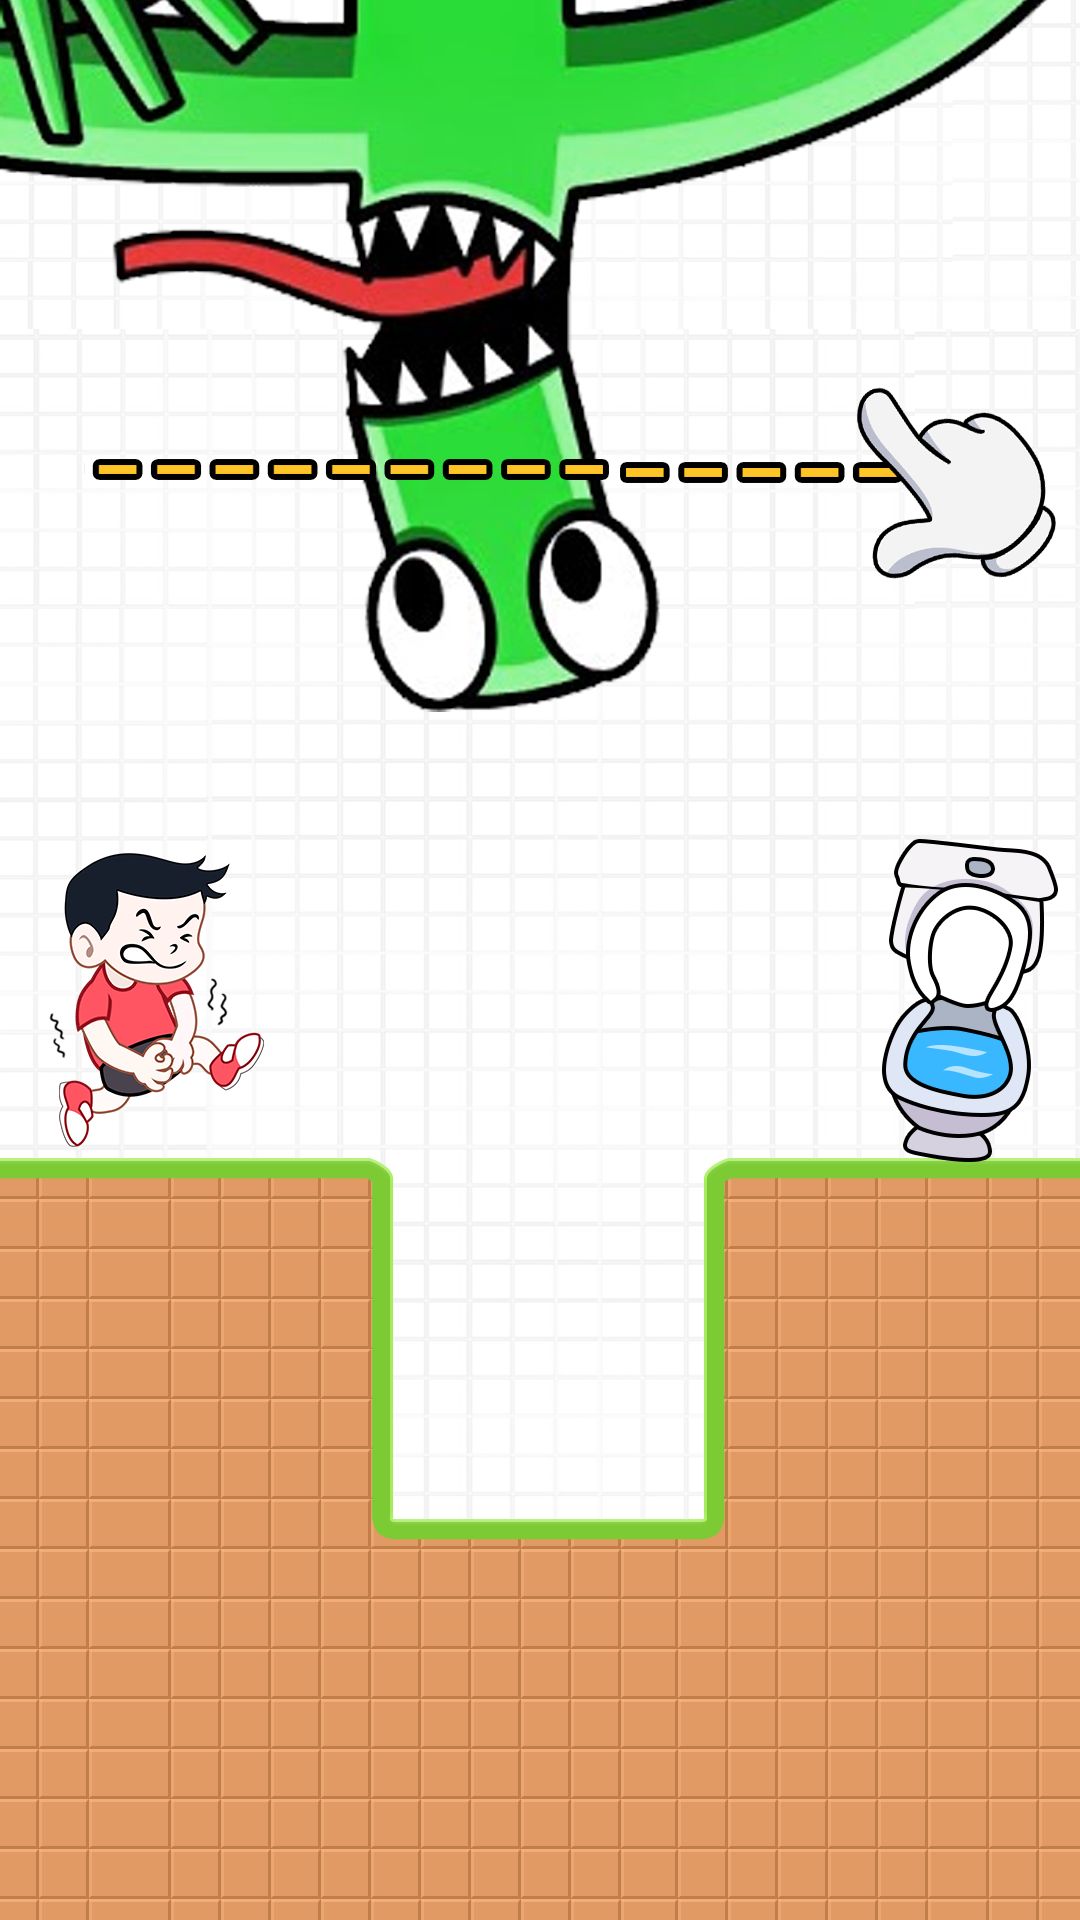 Toilet Run: Bridge Slice - Android game screenshots.